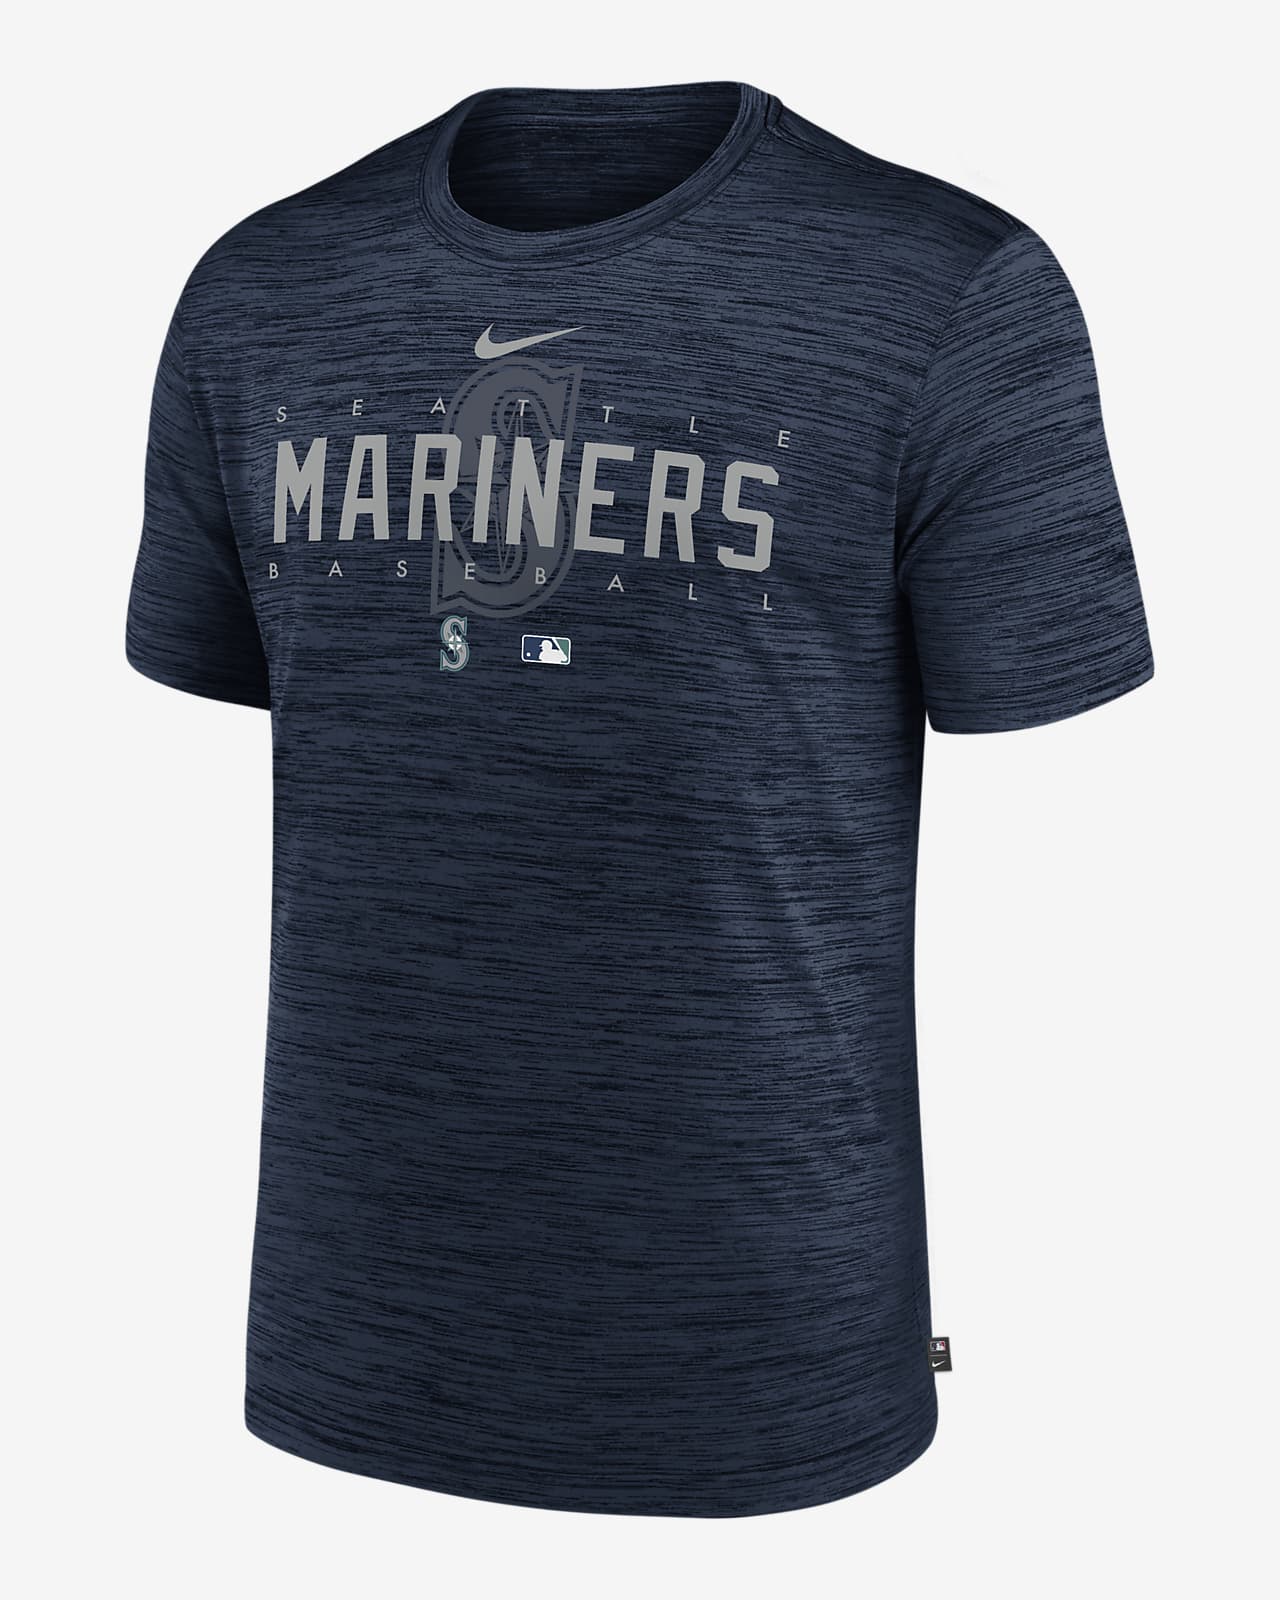 Nike Dri-FIT Velocity Practice (MLB Seattle Mariners) Men's T